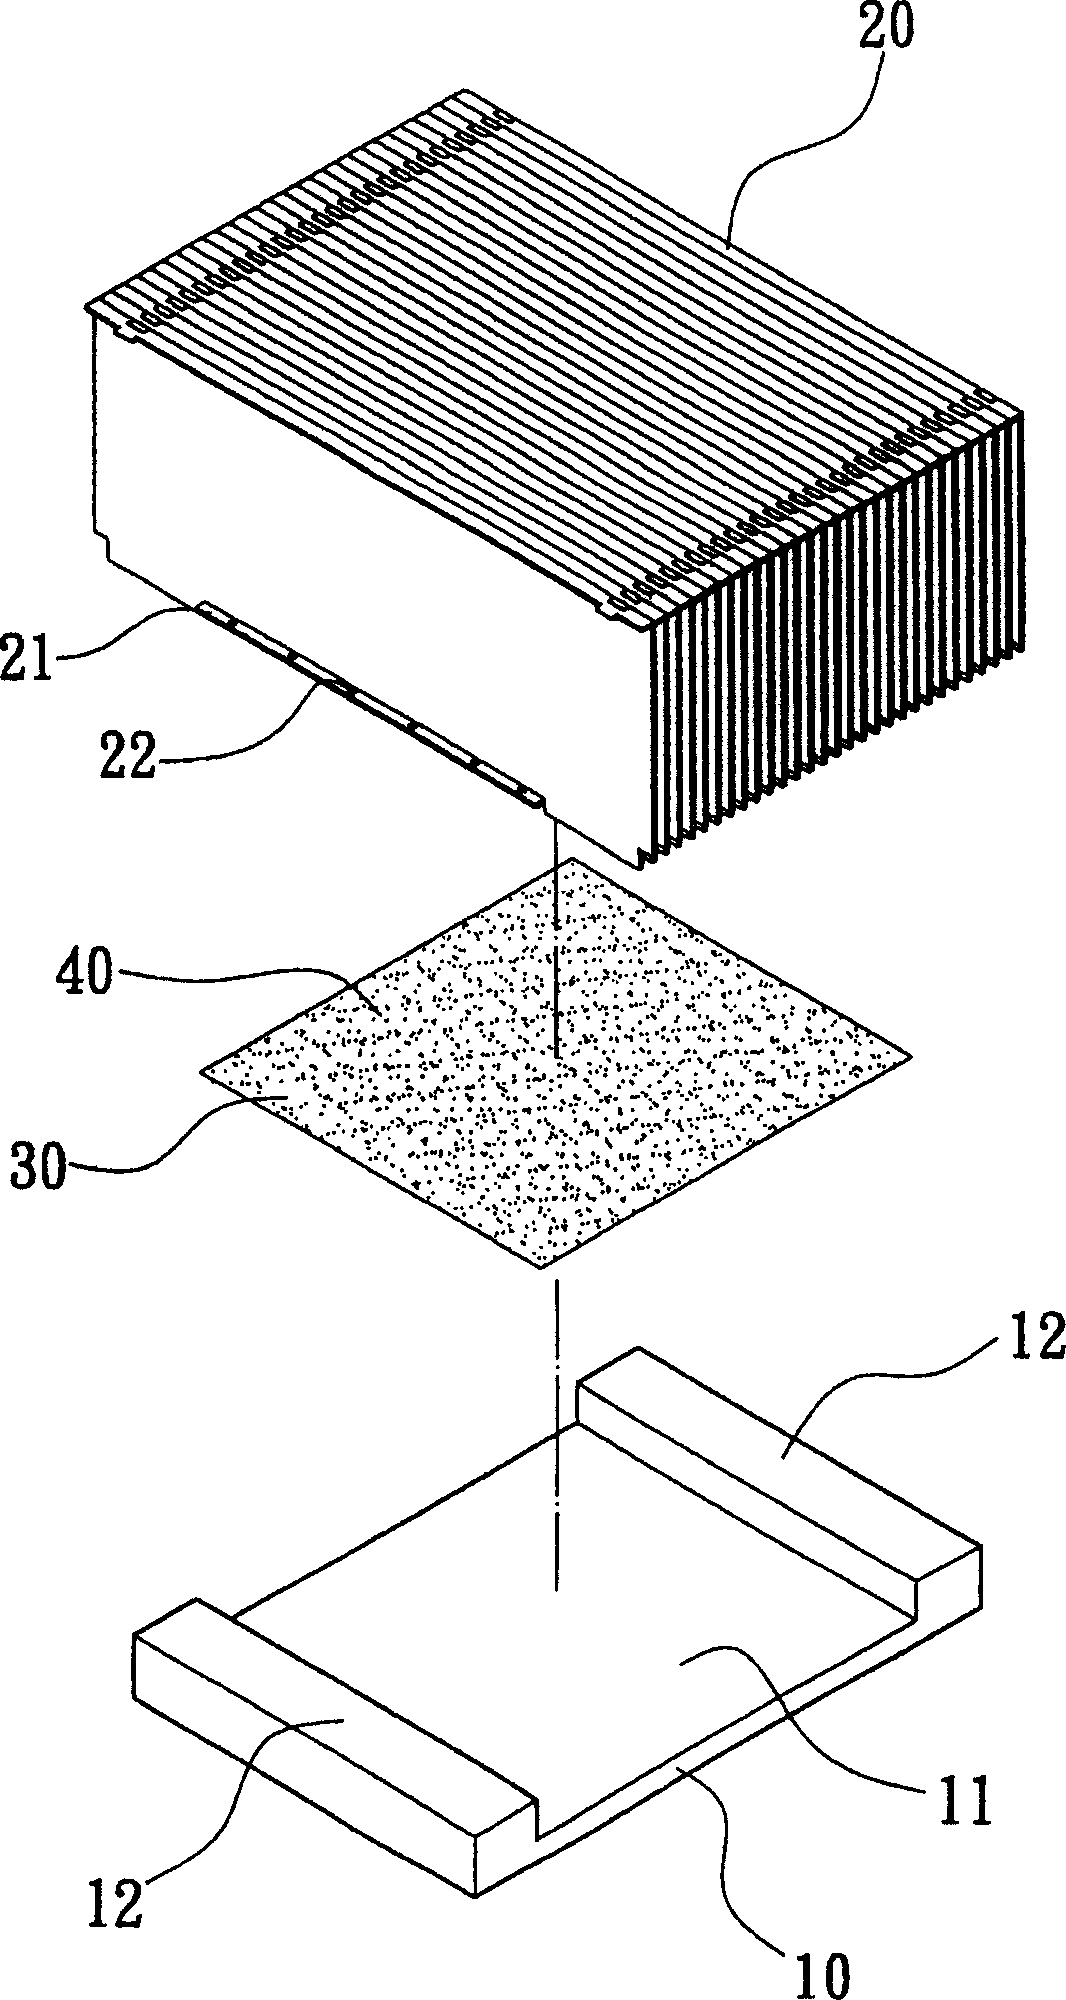 Method for preparing welded heat radiator